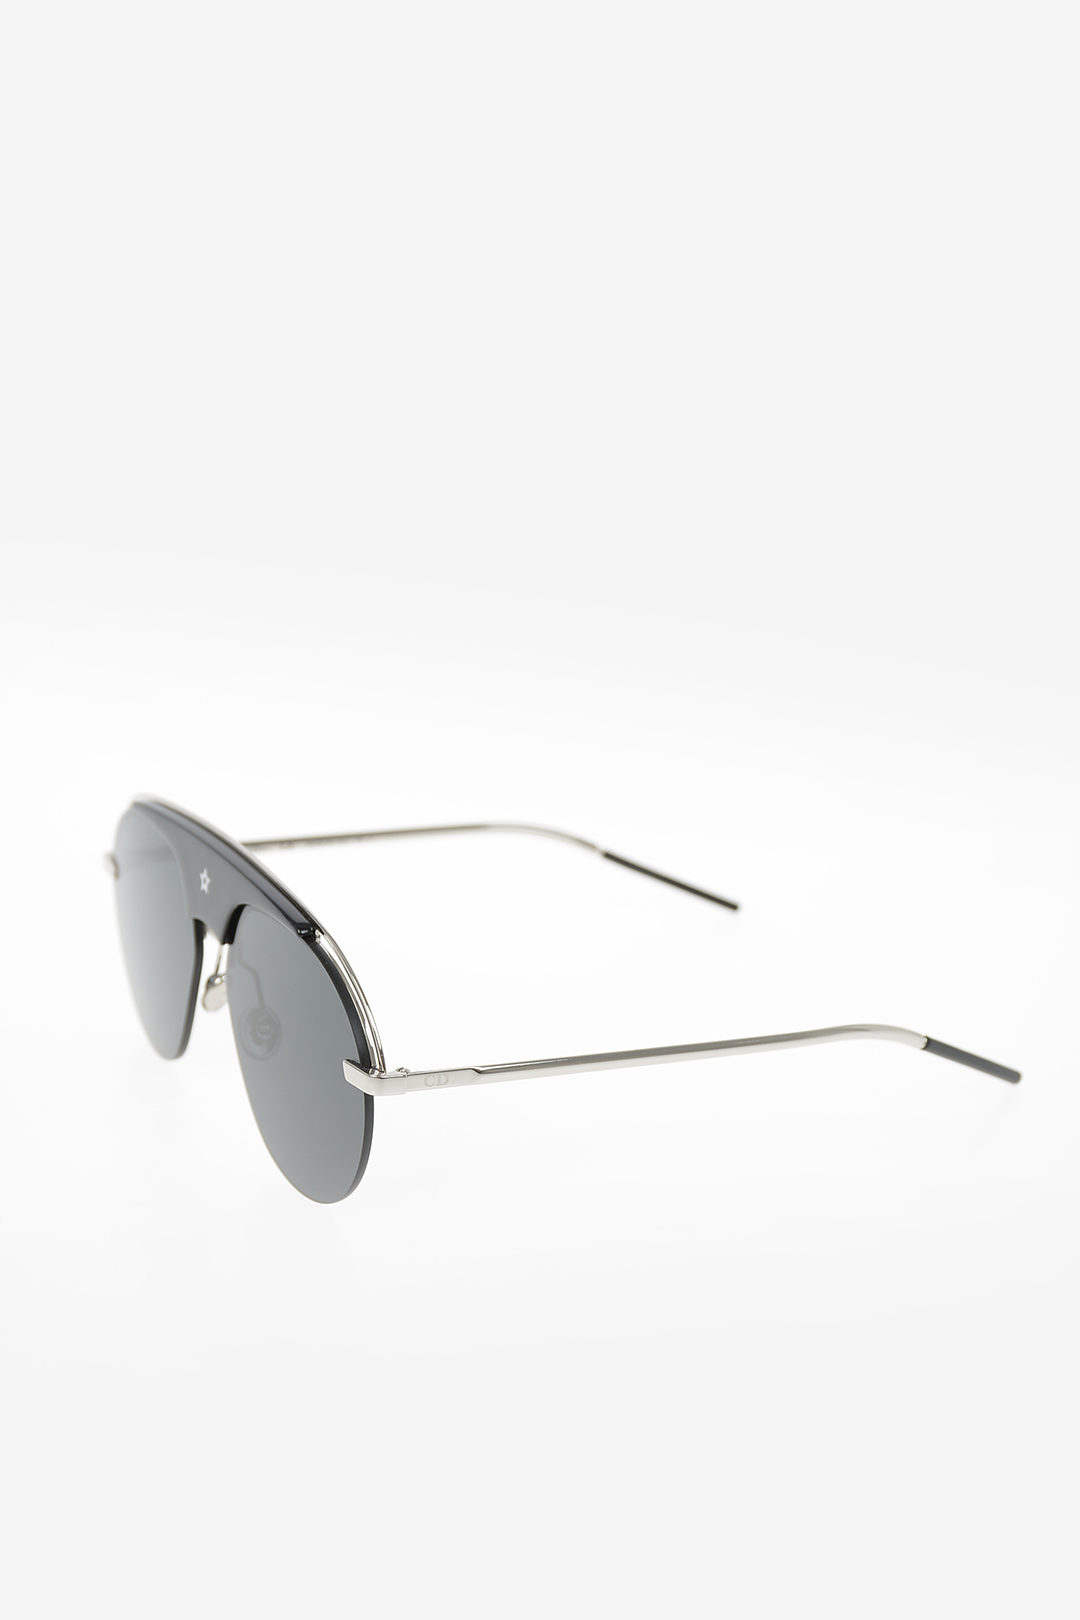 Dior Eyewear  Evolution Aviator Sunglasses  Womens  Silver  ModeSens